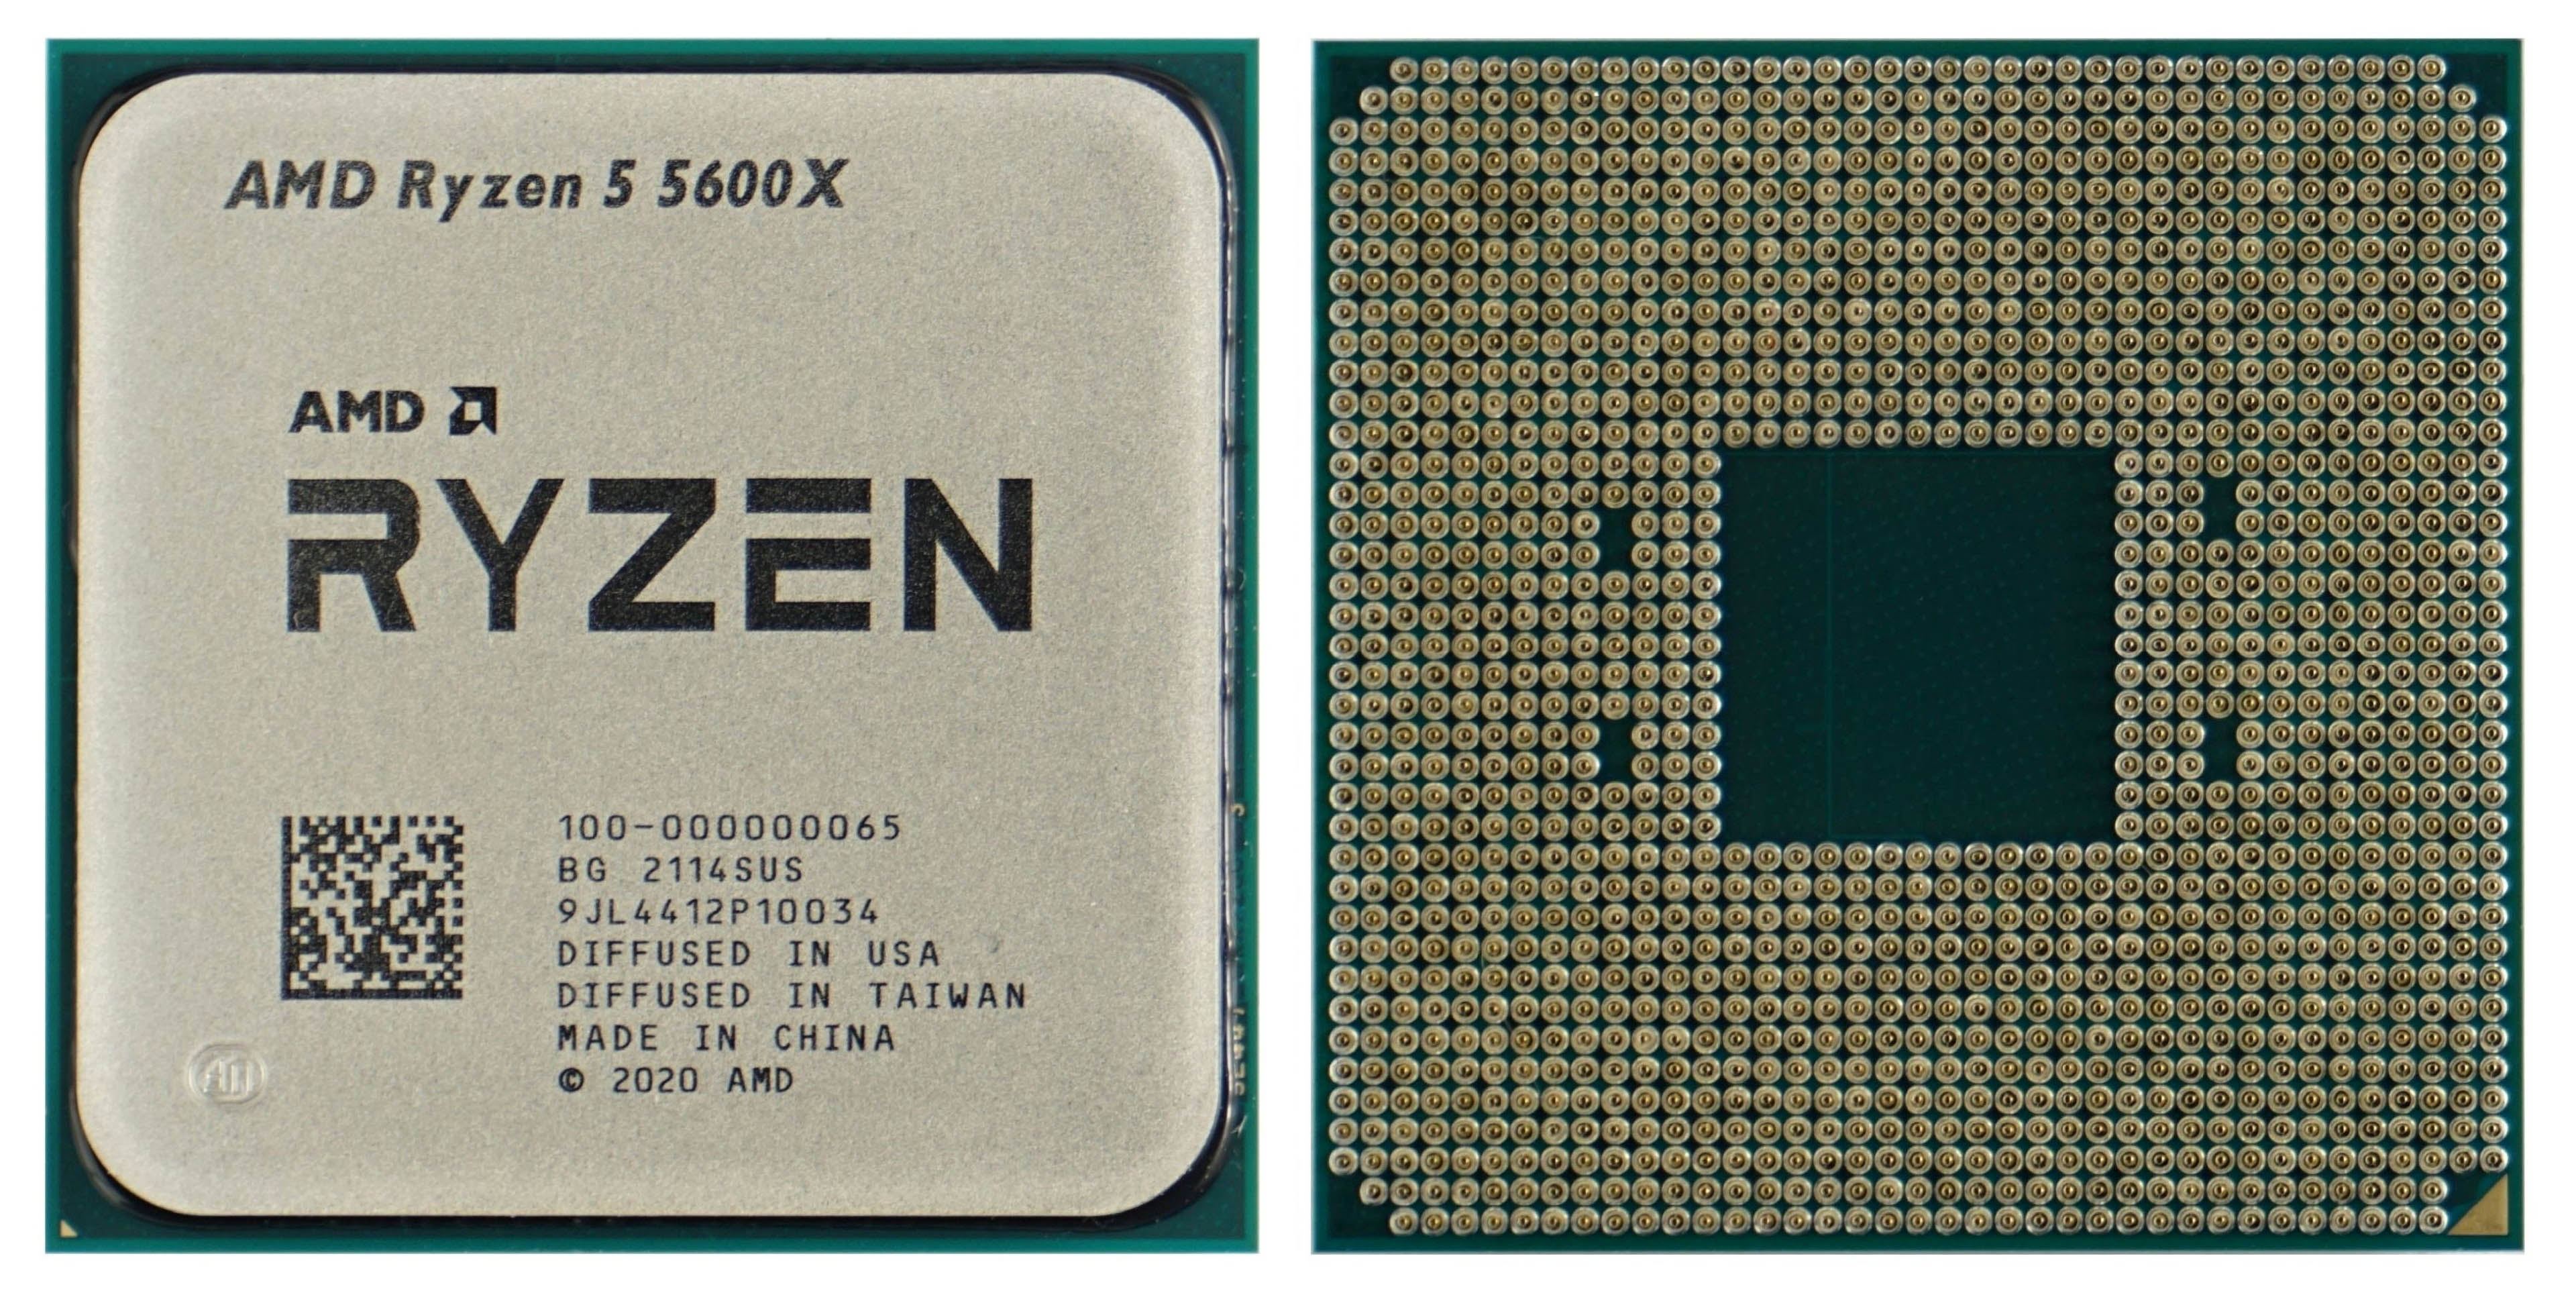 AMD Ryzen 5 5600X: Worth €120 more than the Core i5? - HWCooling.net